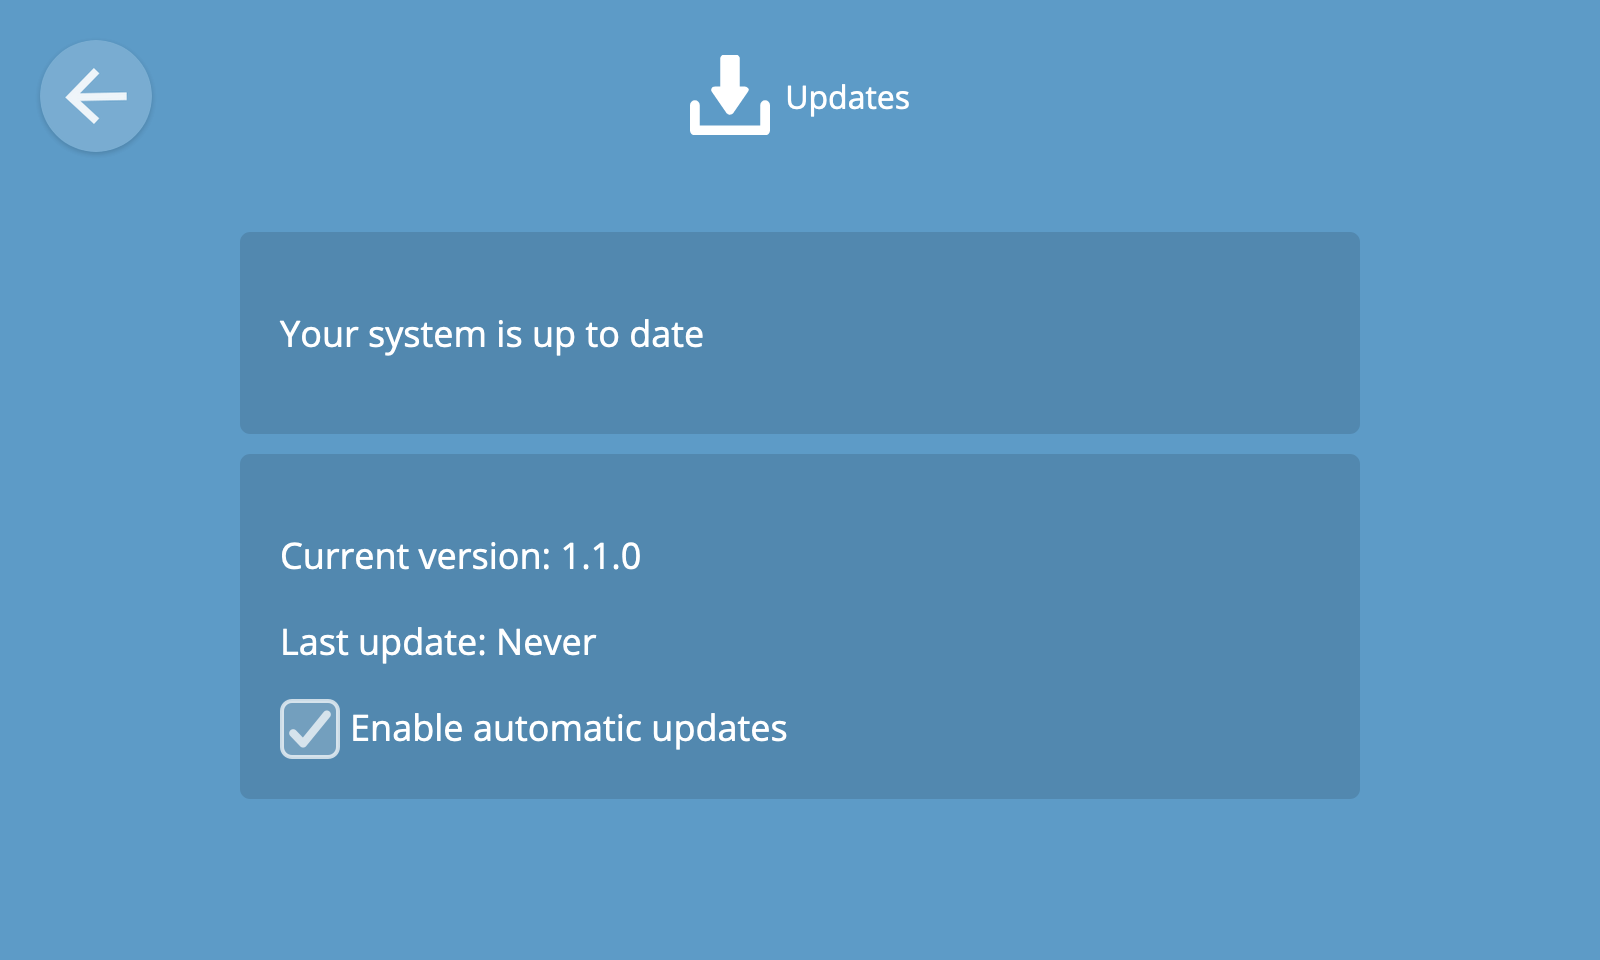 Screenshot of the updates screen